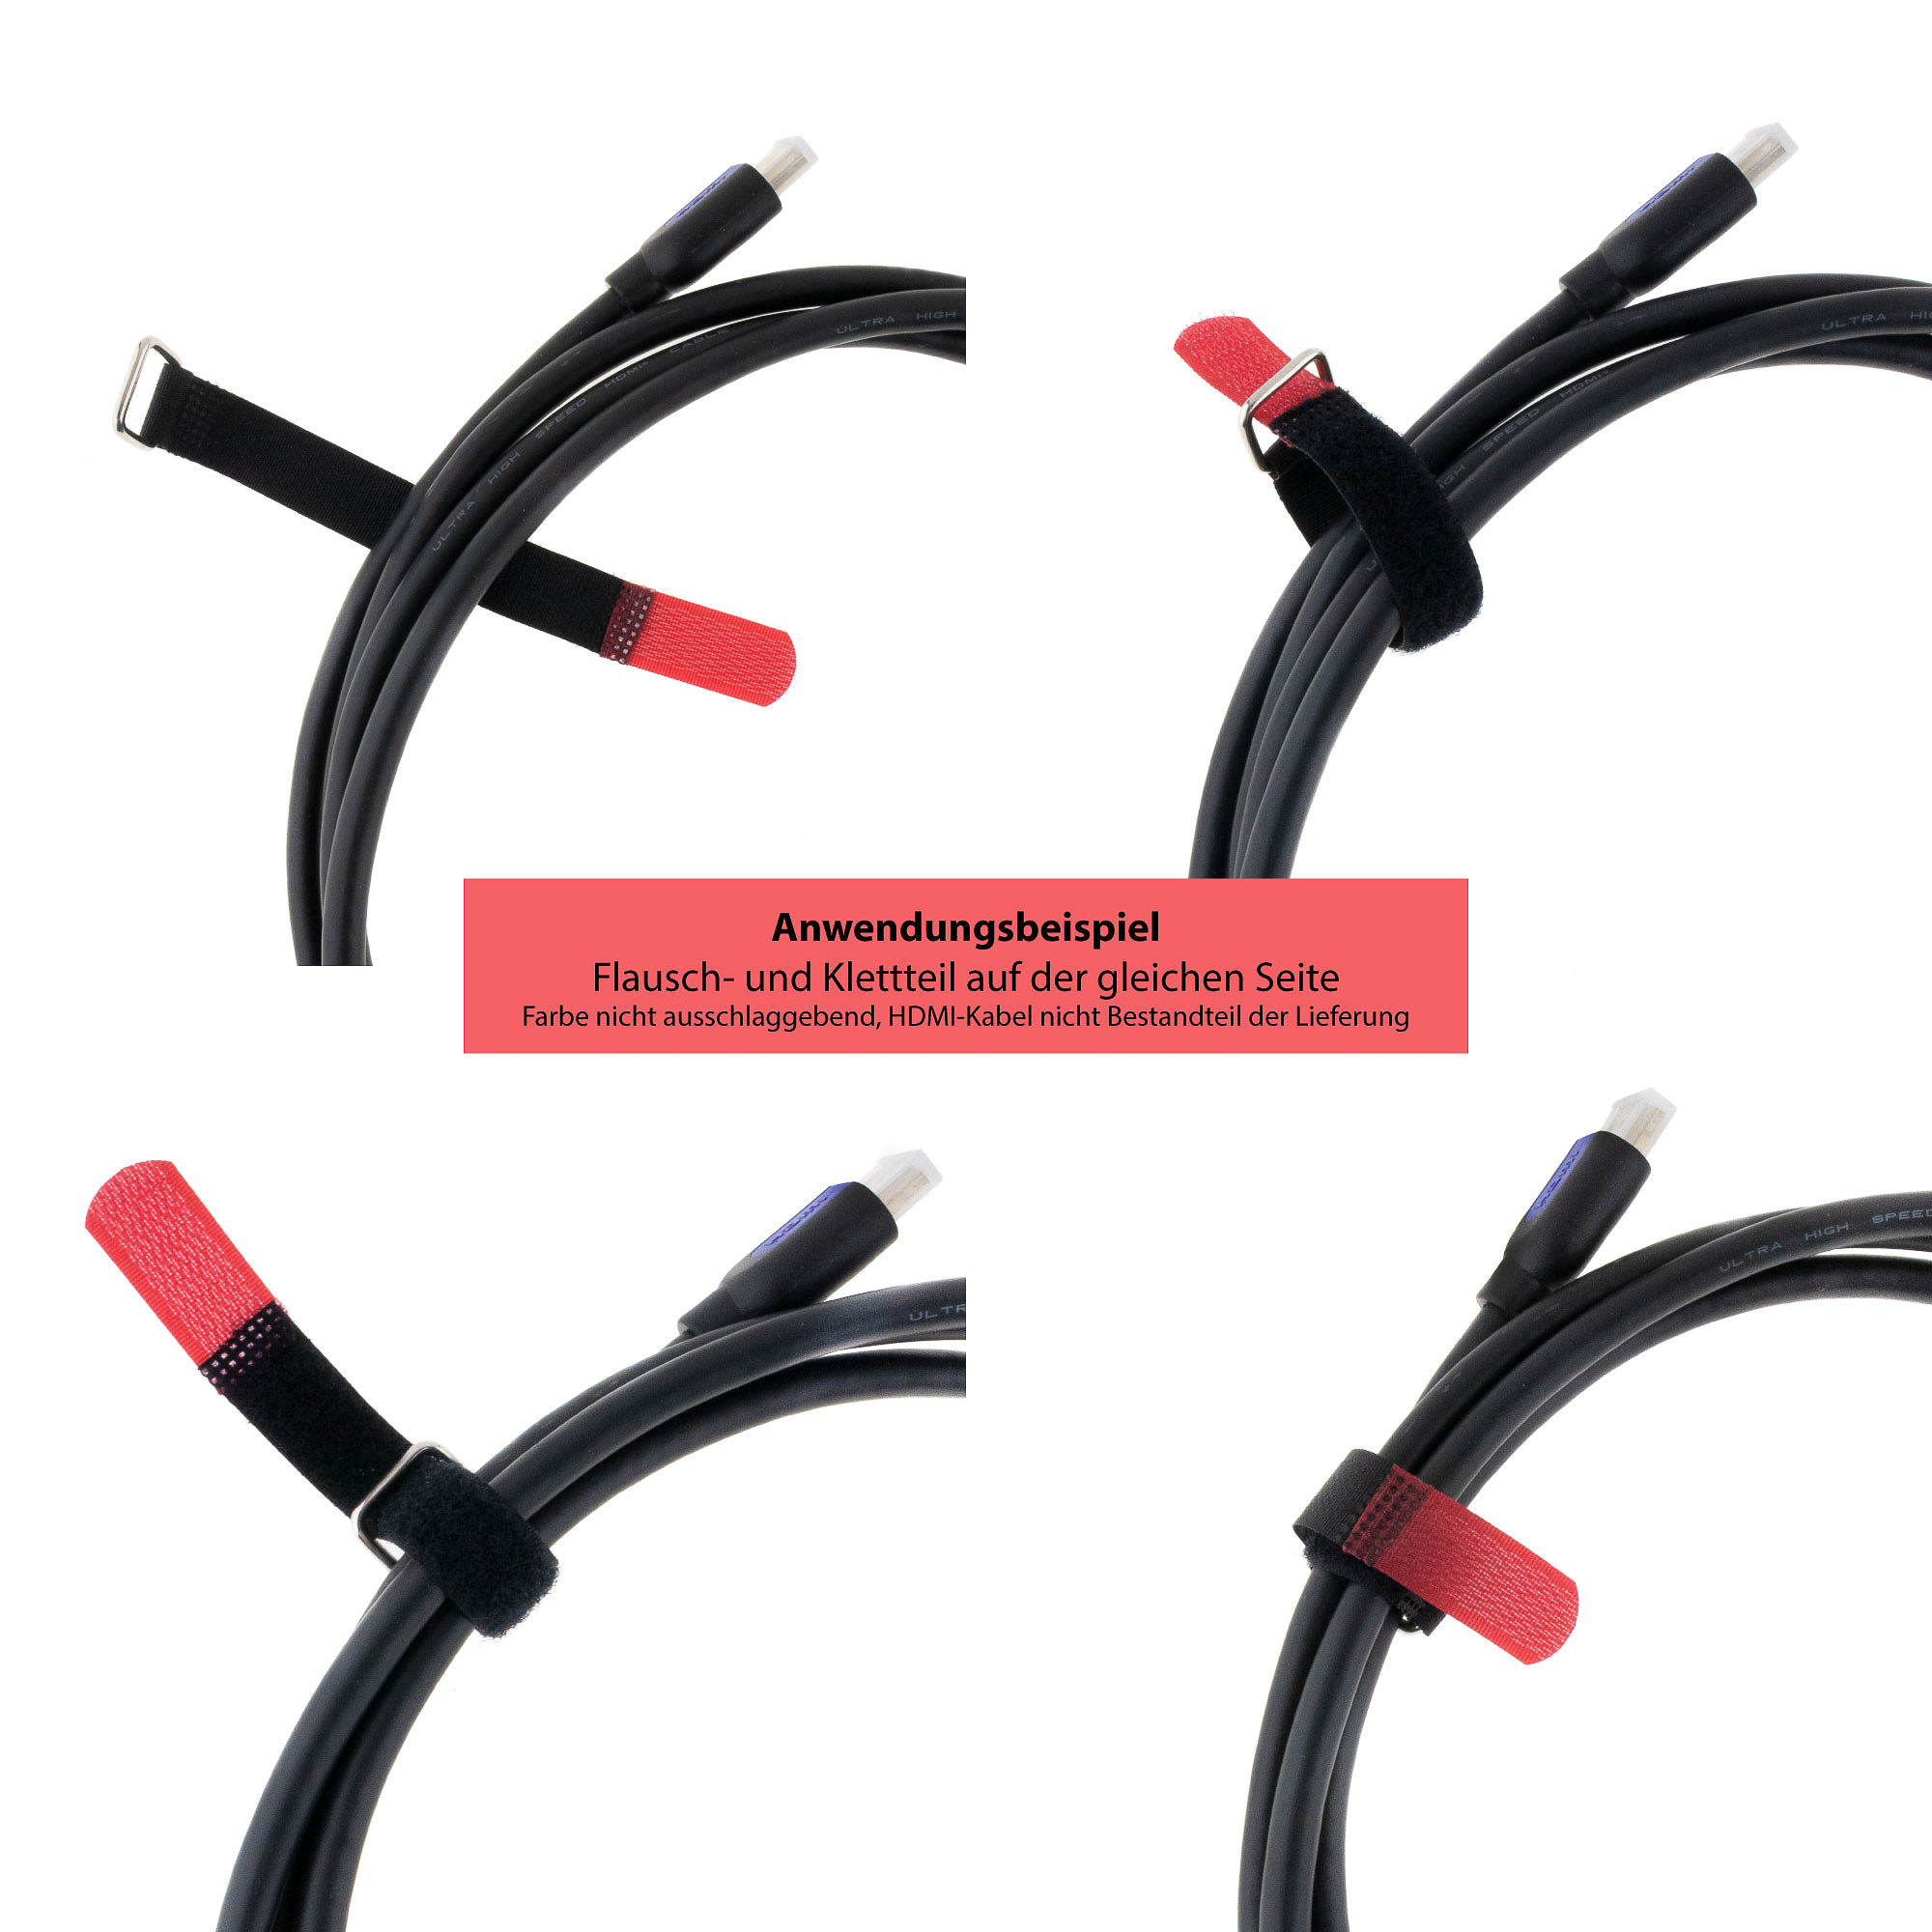 Hook-and-loop strap 150x16, black/green, 10PCS